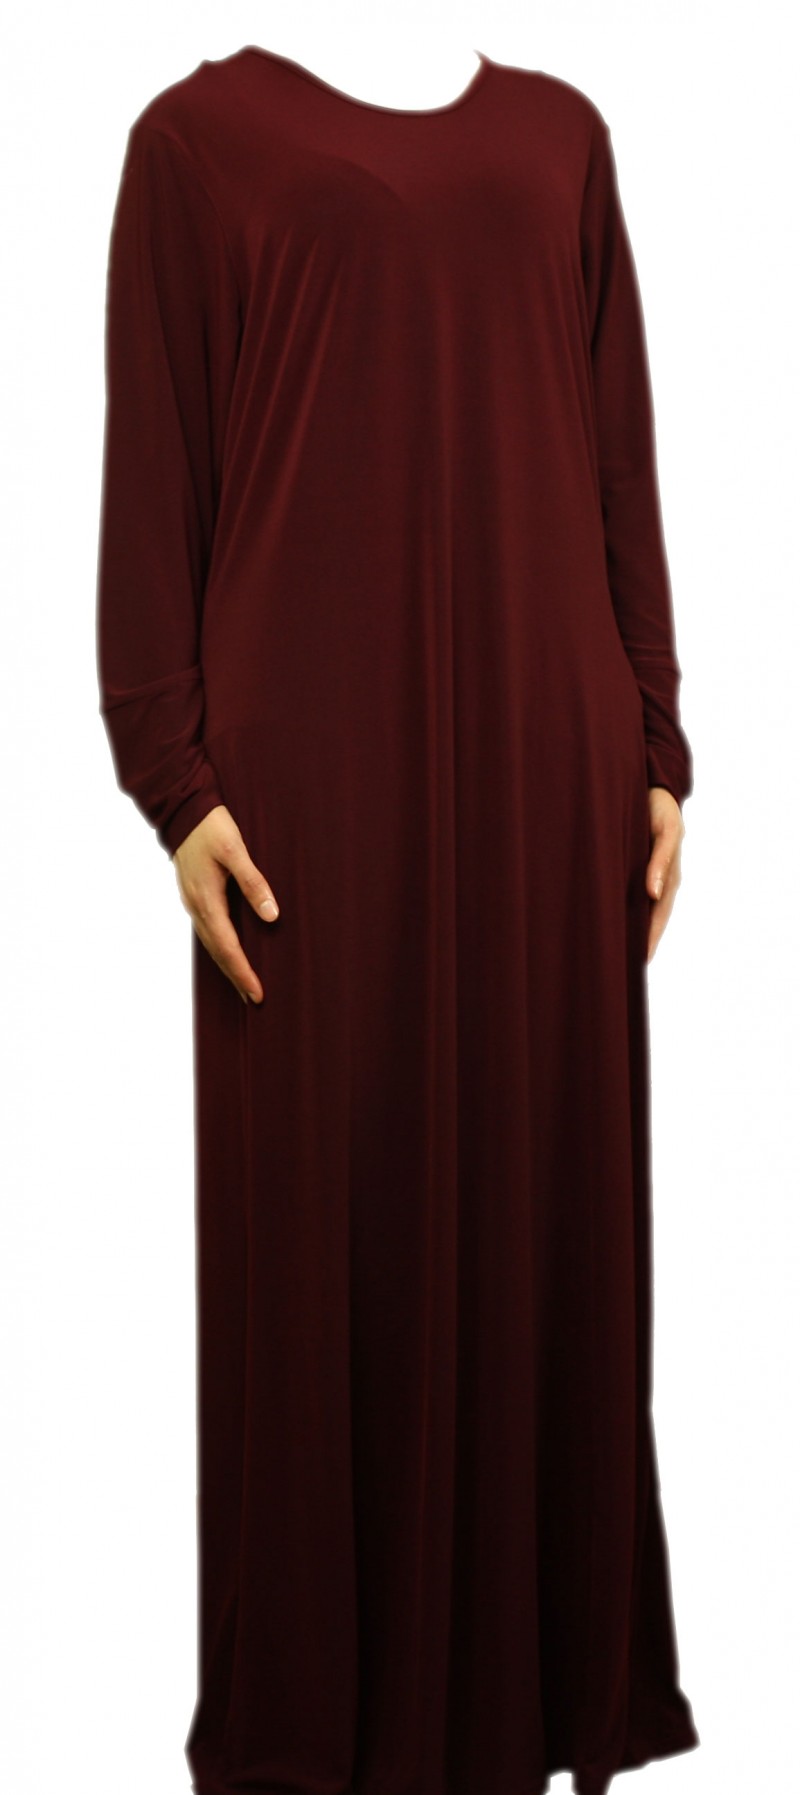 Plain Wine Red Abaya - Size 60